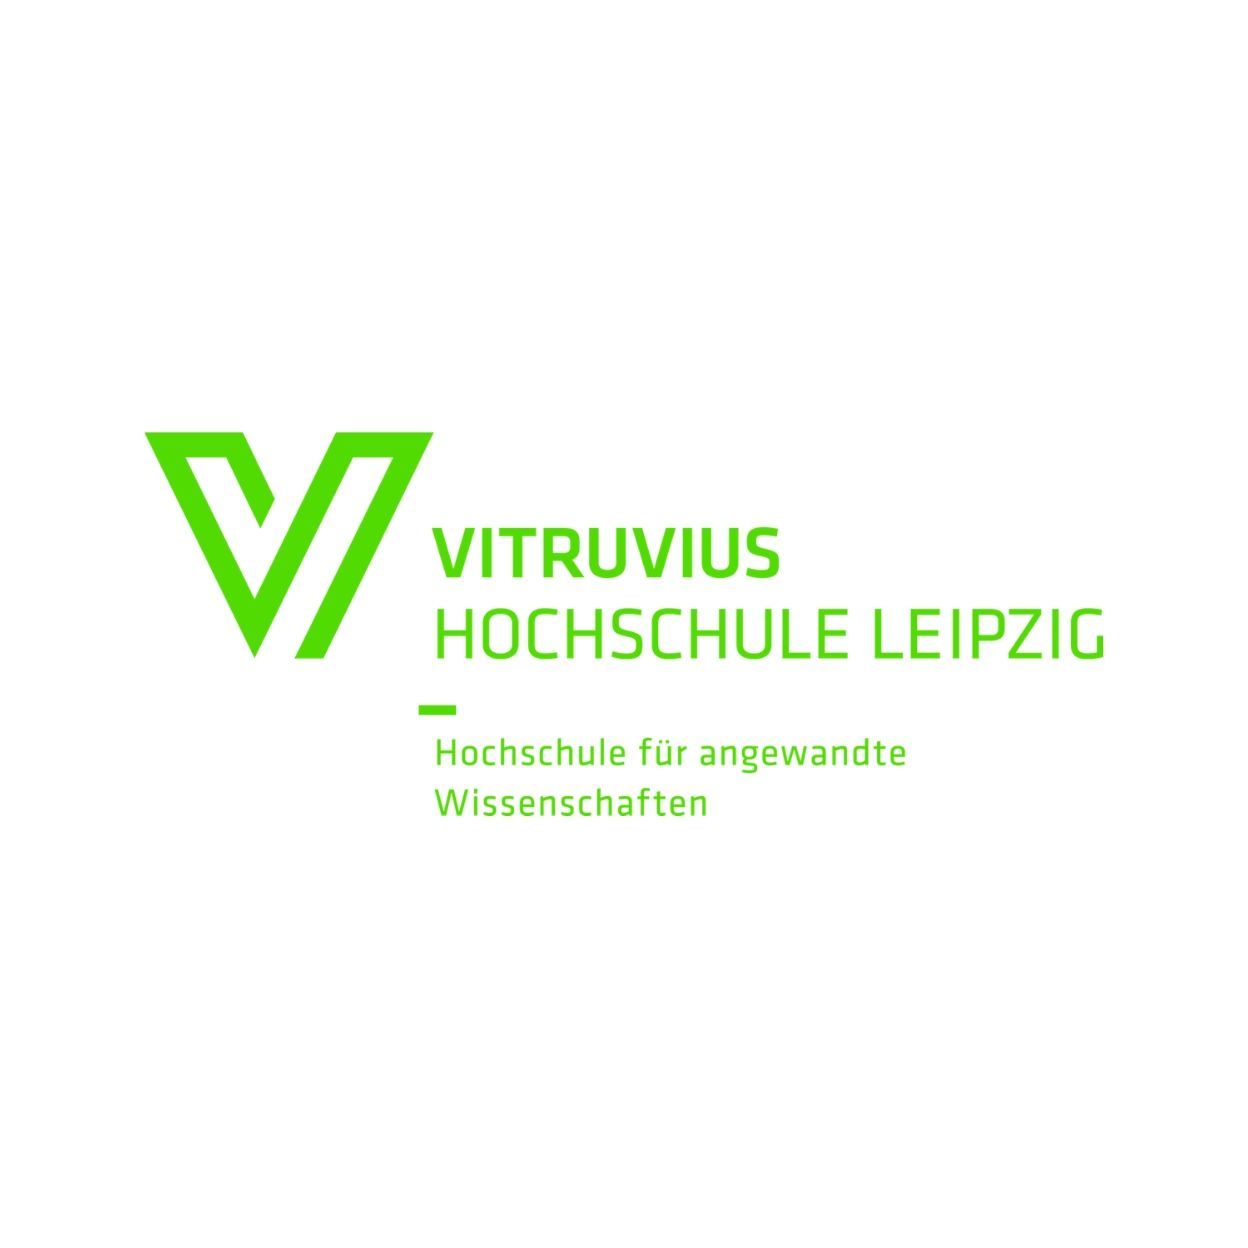 Vitruvius Hochschule Leipzig